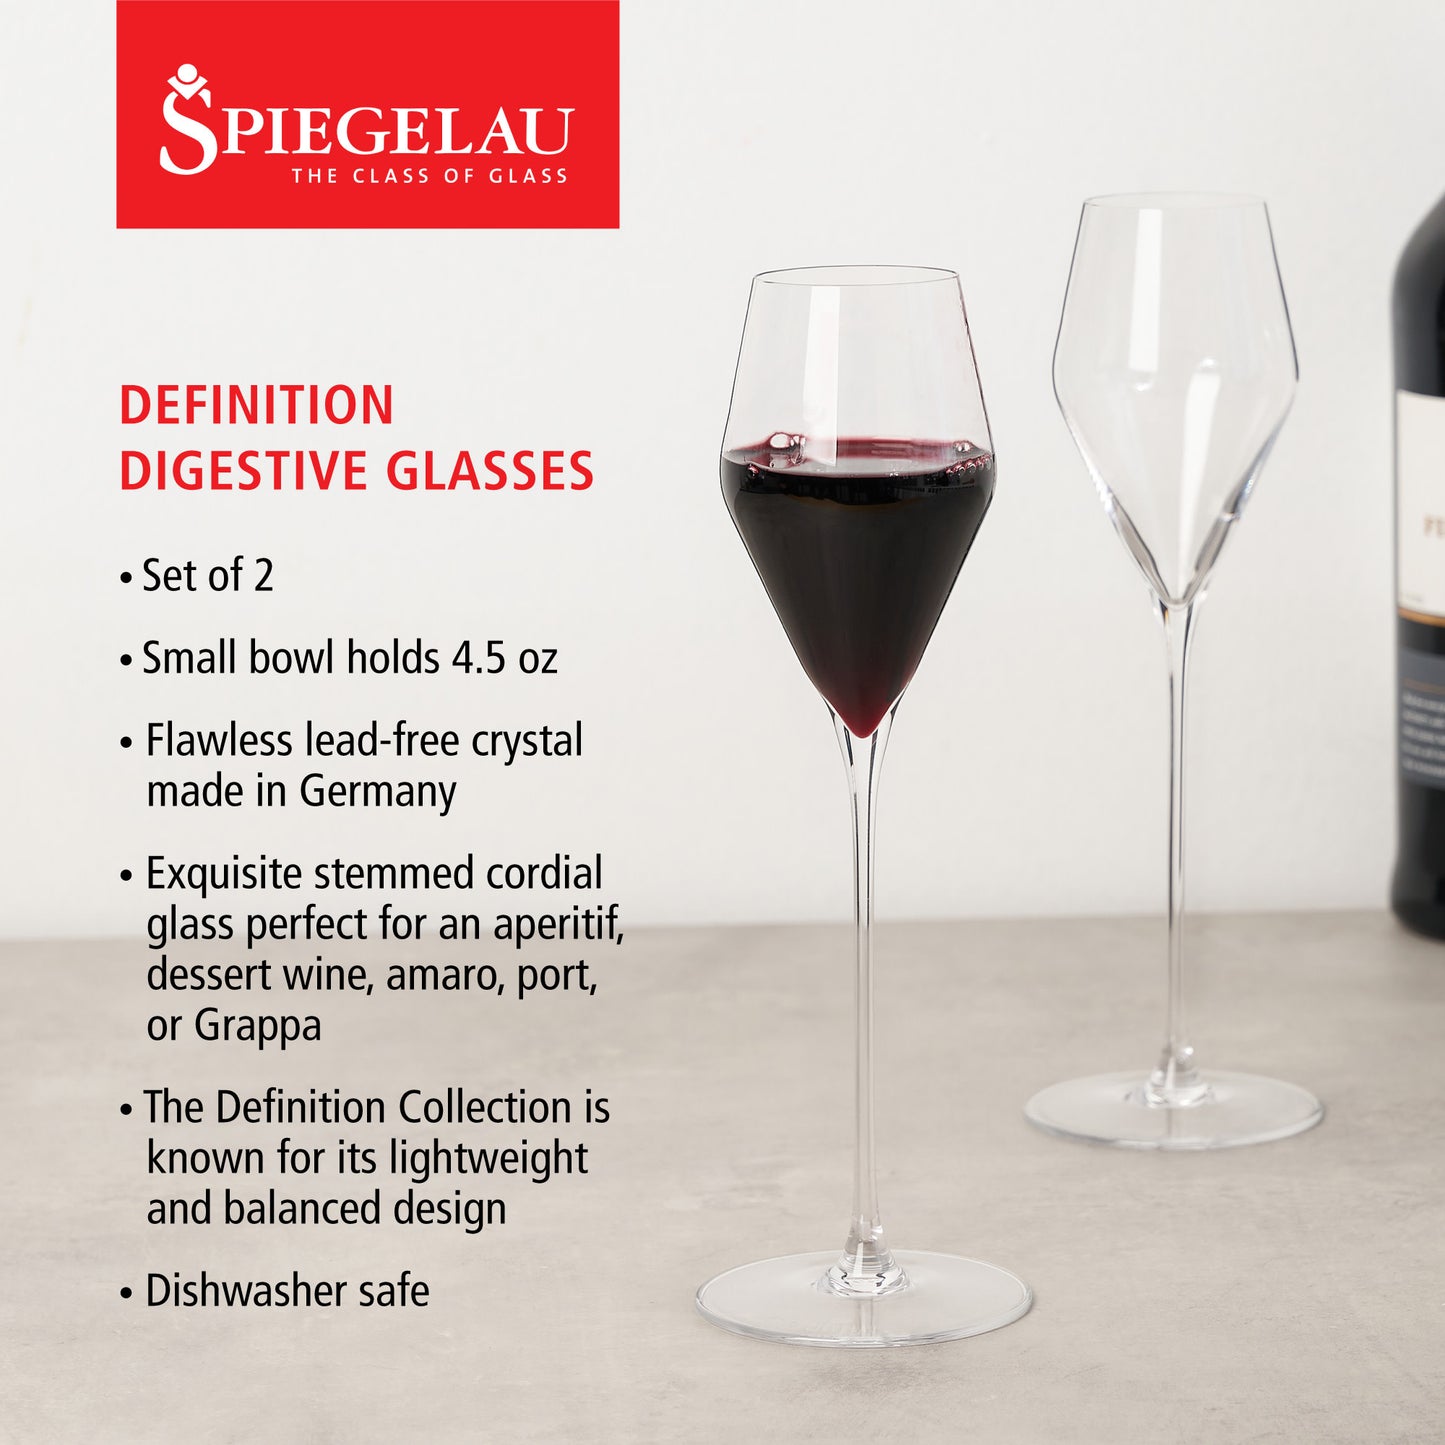 Spiegelau Definition 4.5 oz Digestive Glass (set of 2)